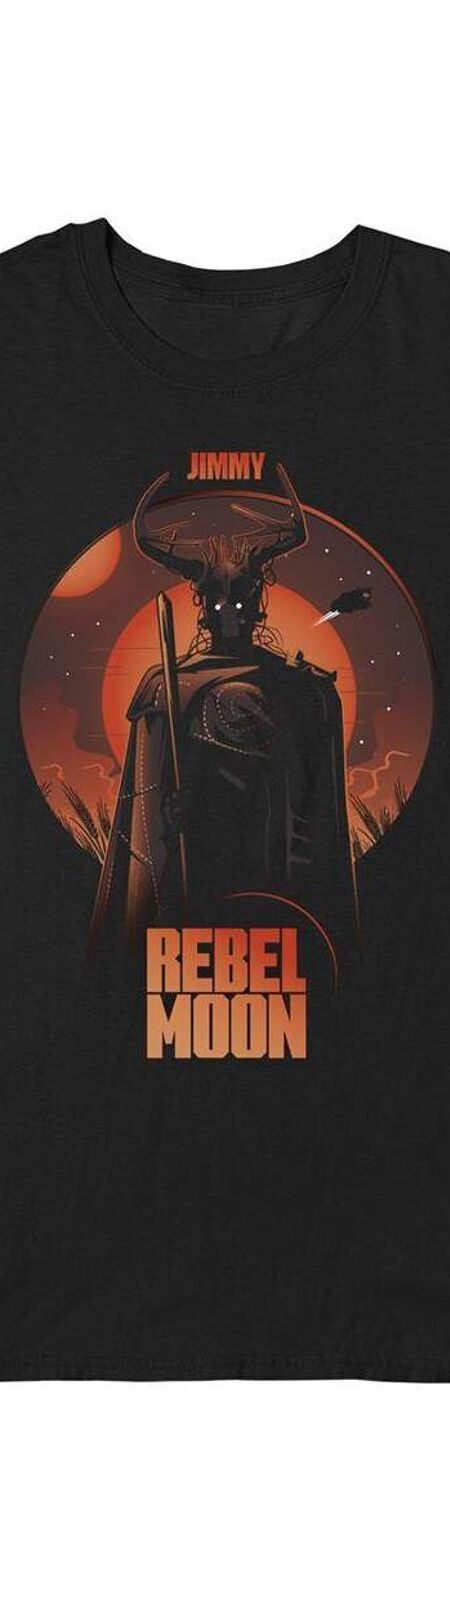 Rebel Moon - T-shirt - Adulte (Noir) - UTPM7759